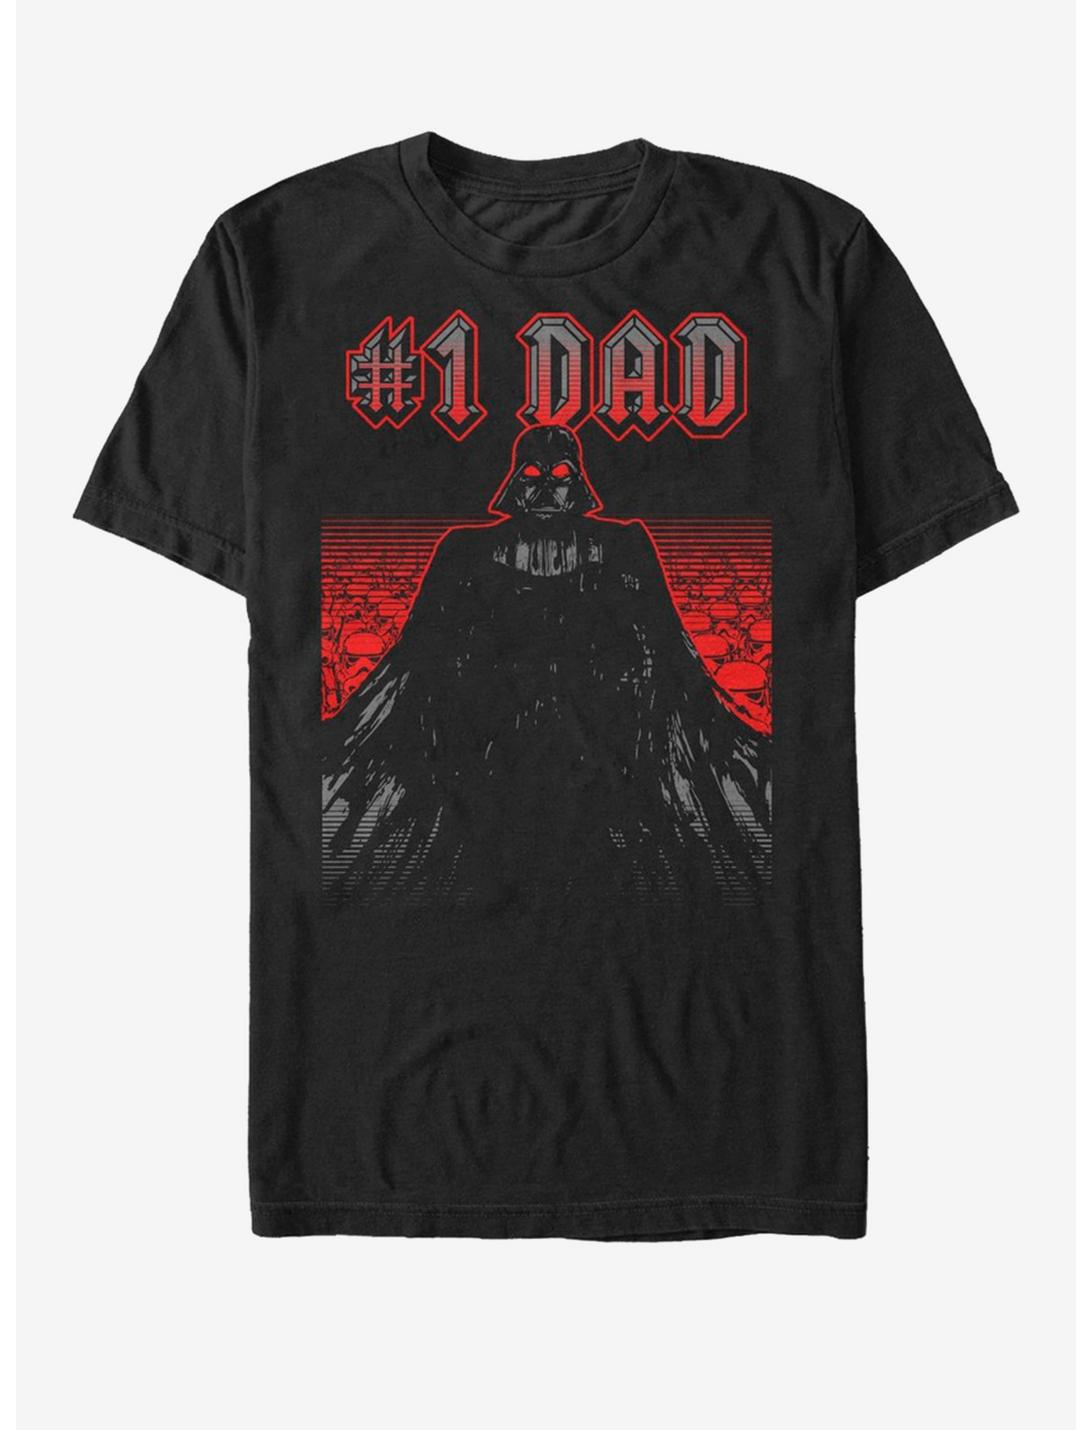 Star Wars Hashtag One Dad T-Shirt, BLACK, hi-res